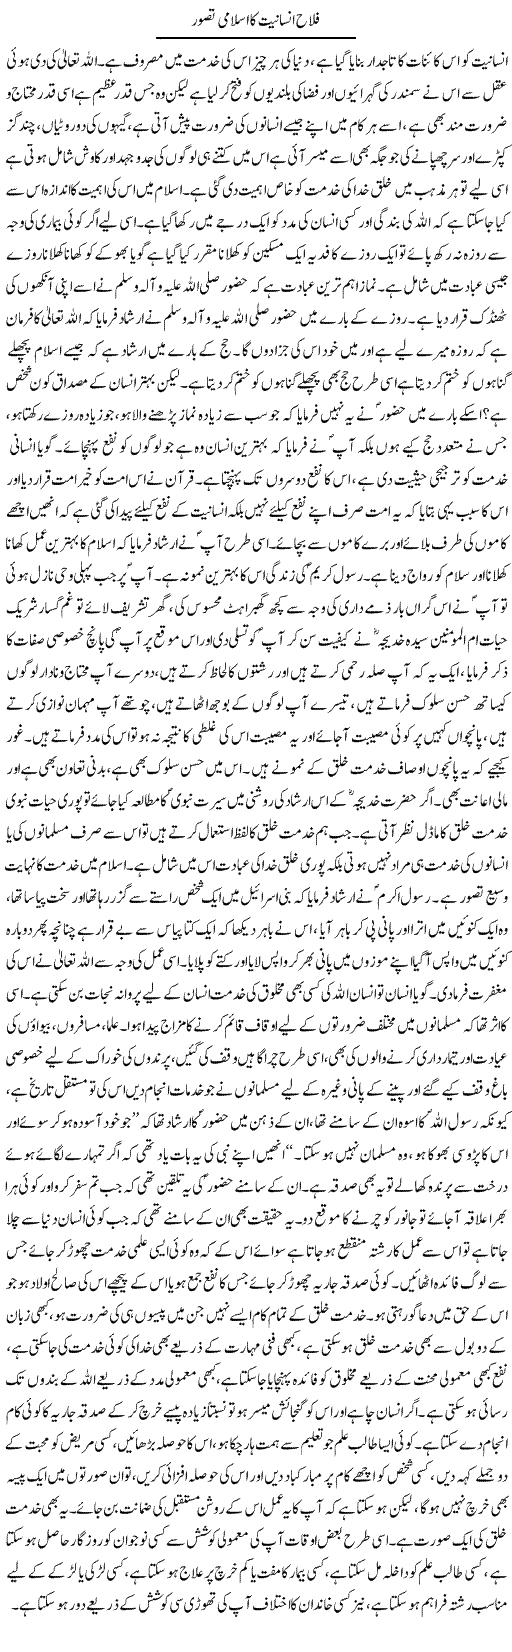 Falah Insaniat Ka Islami Tasawwur | Shaheen Rehman | Daily Urdu Columns